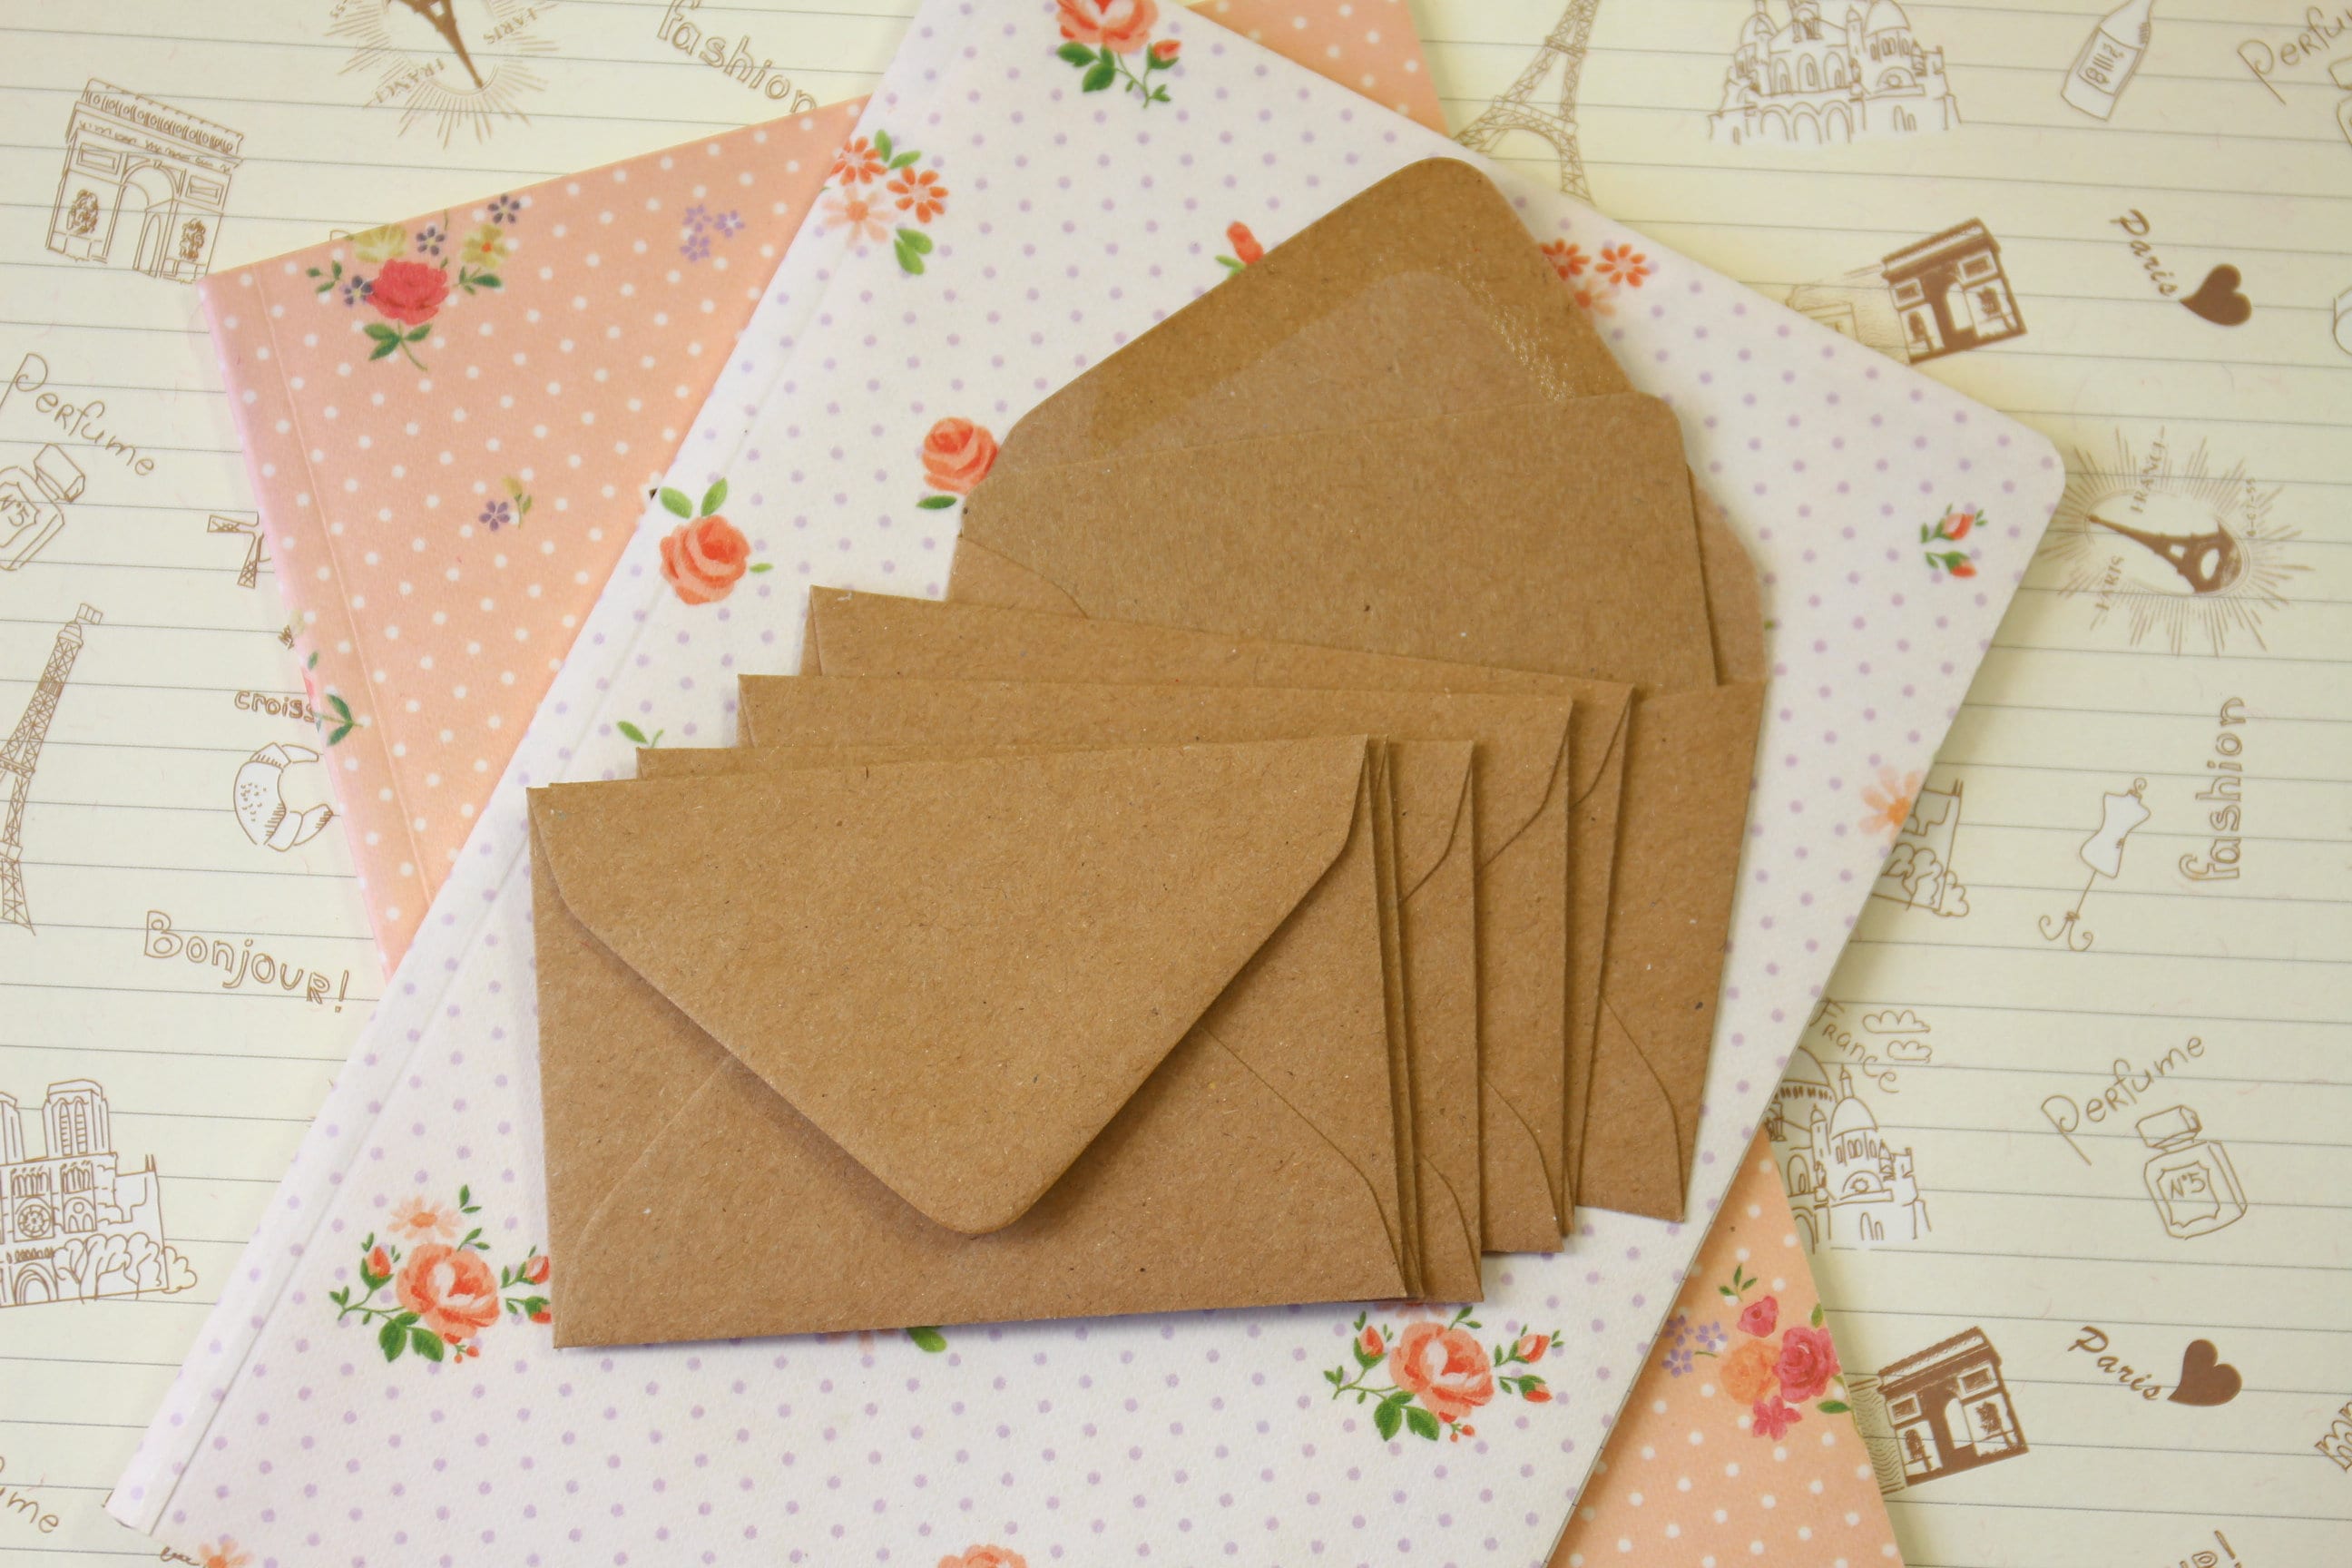 Sobres de papel Kraft pequeños bolsas de favor de la boda, mini sobres de  papel marrón, sobres de Manila, 97 mm x 67 mm, vendedor del Reino Unido -   México